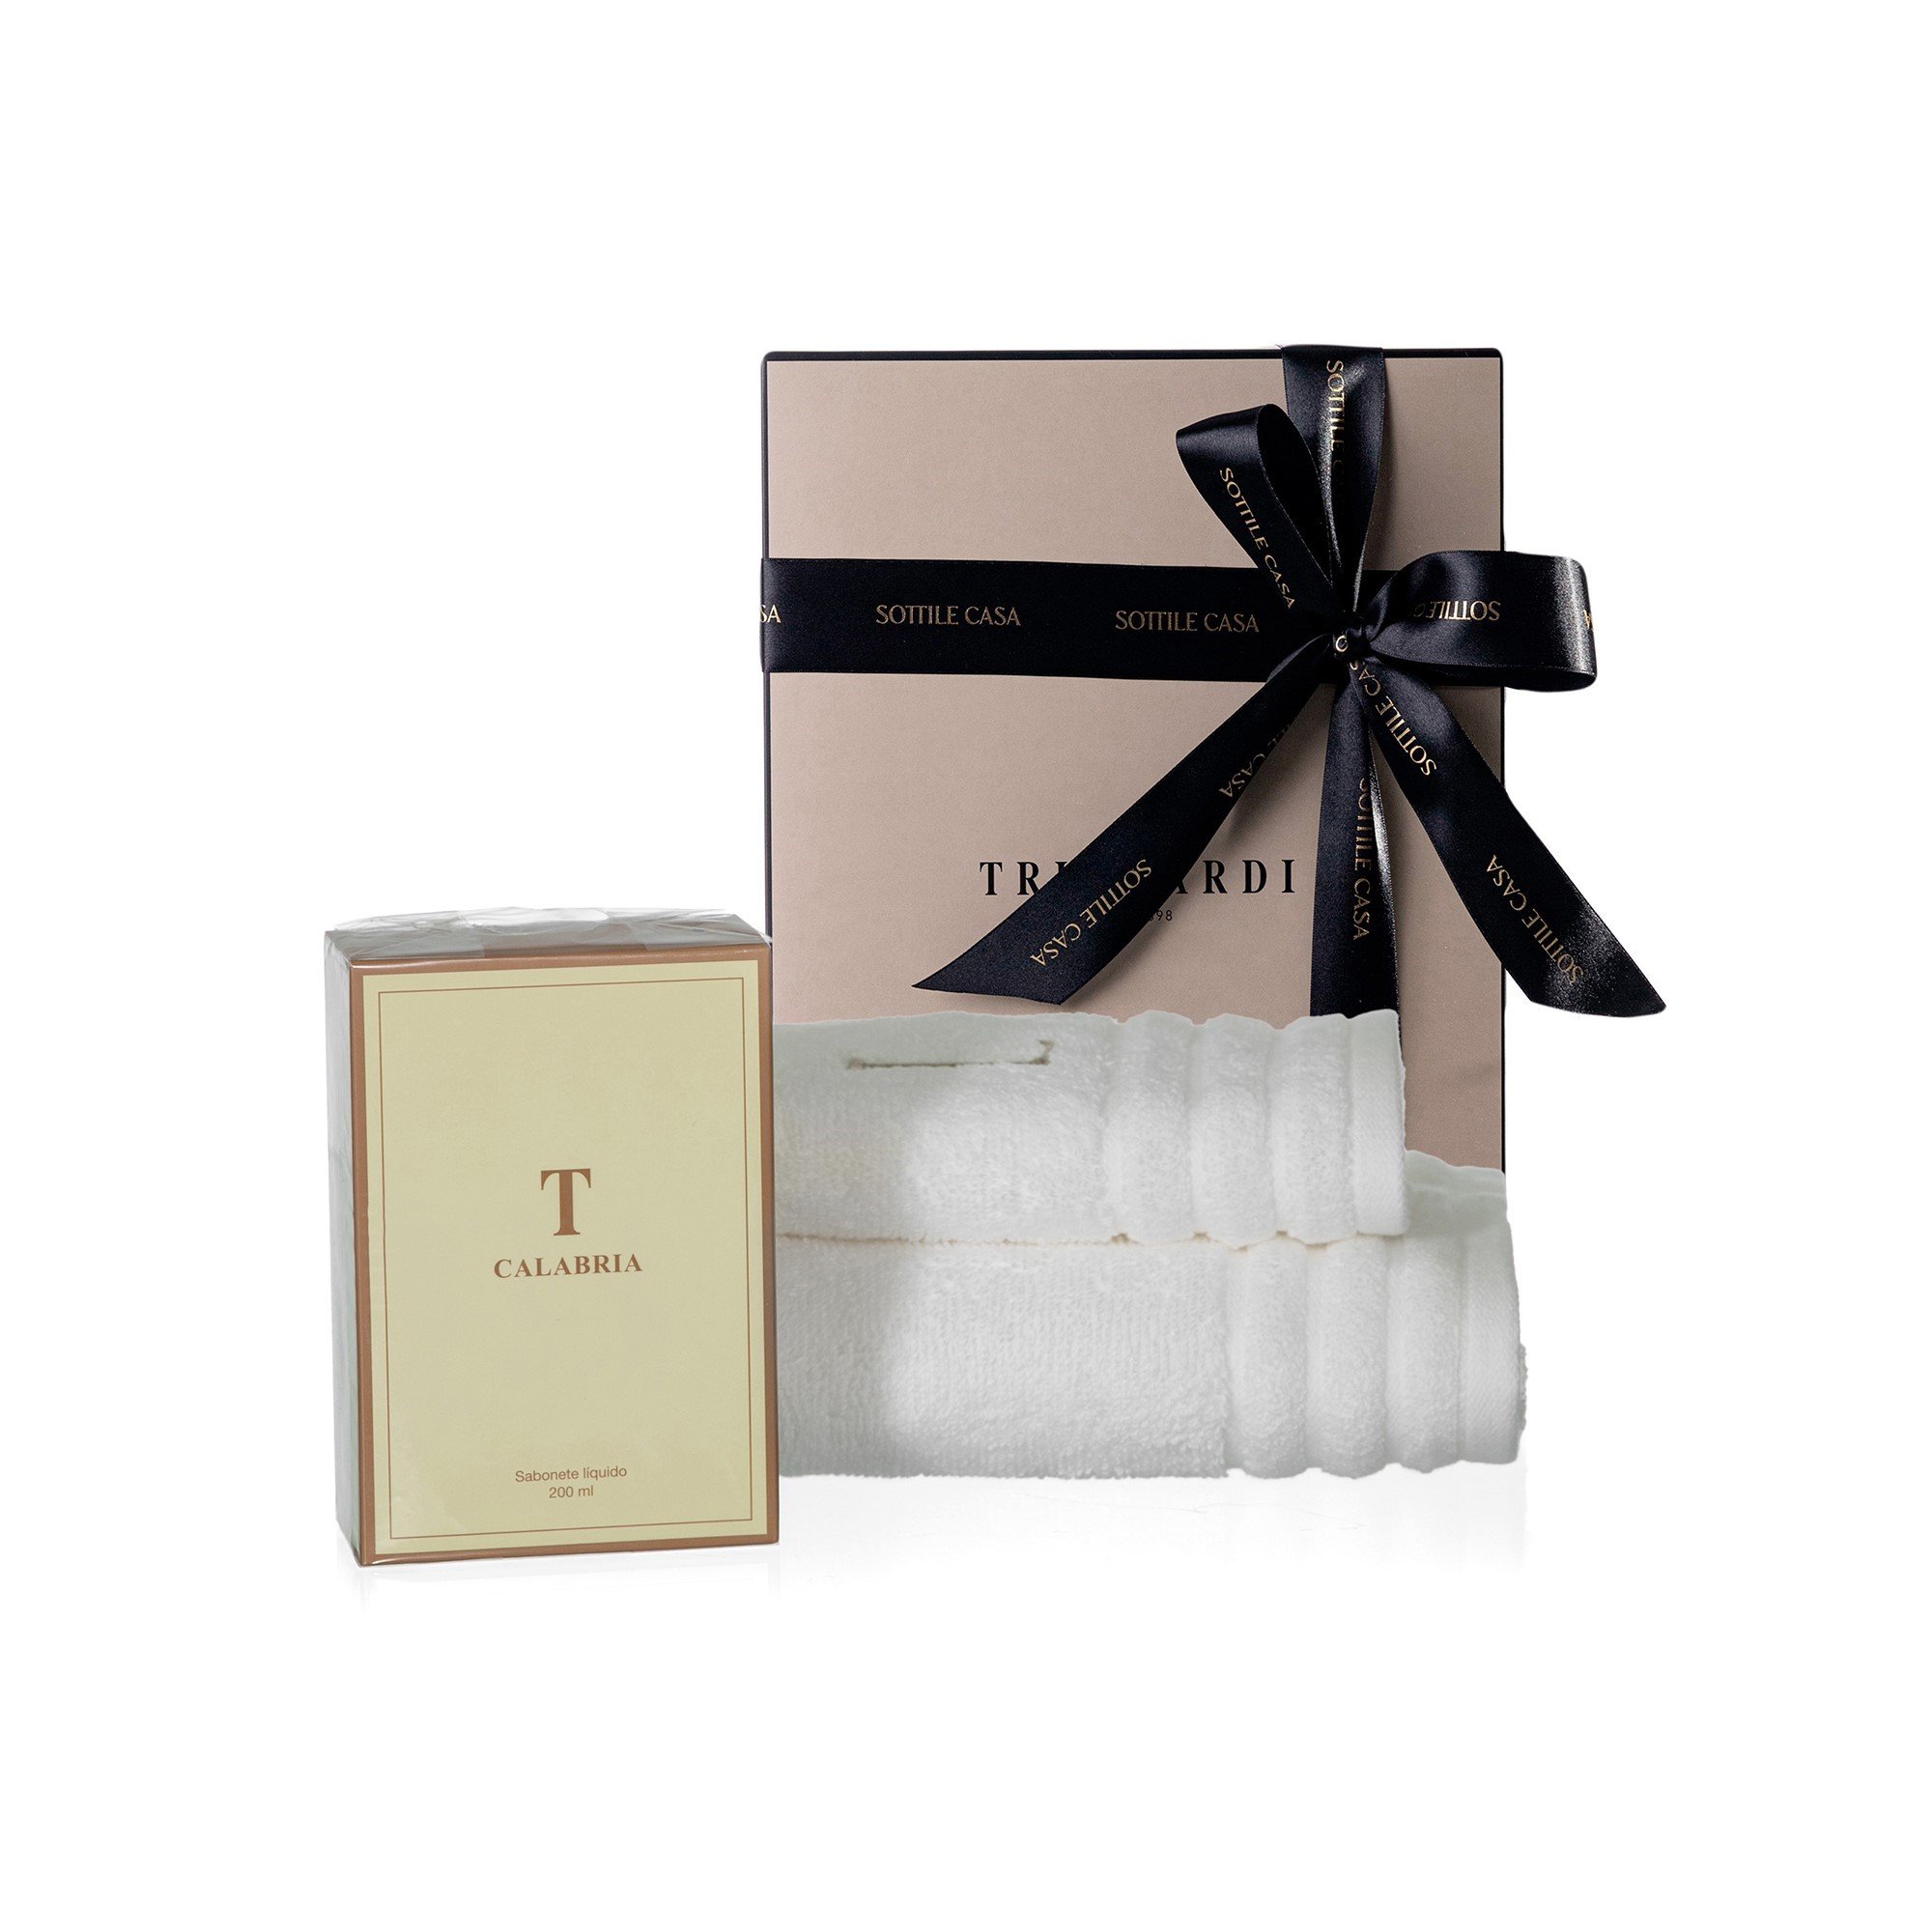 01 kit presente trussardi sabonete liquido calabria 200ml toalhas de lavabo e rosto imperiale branco